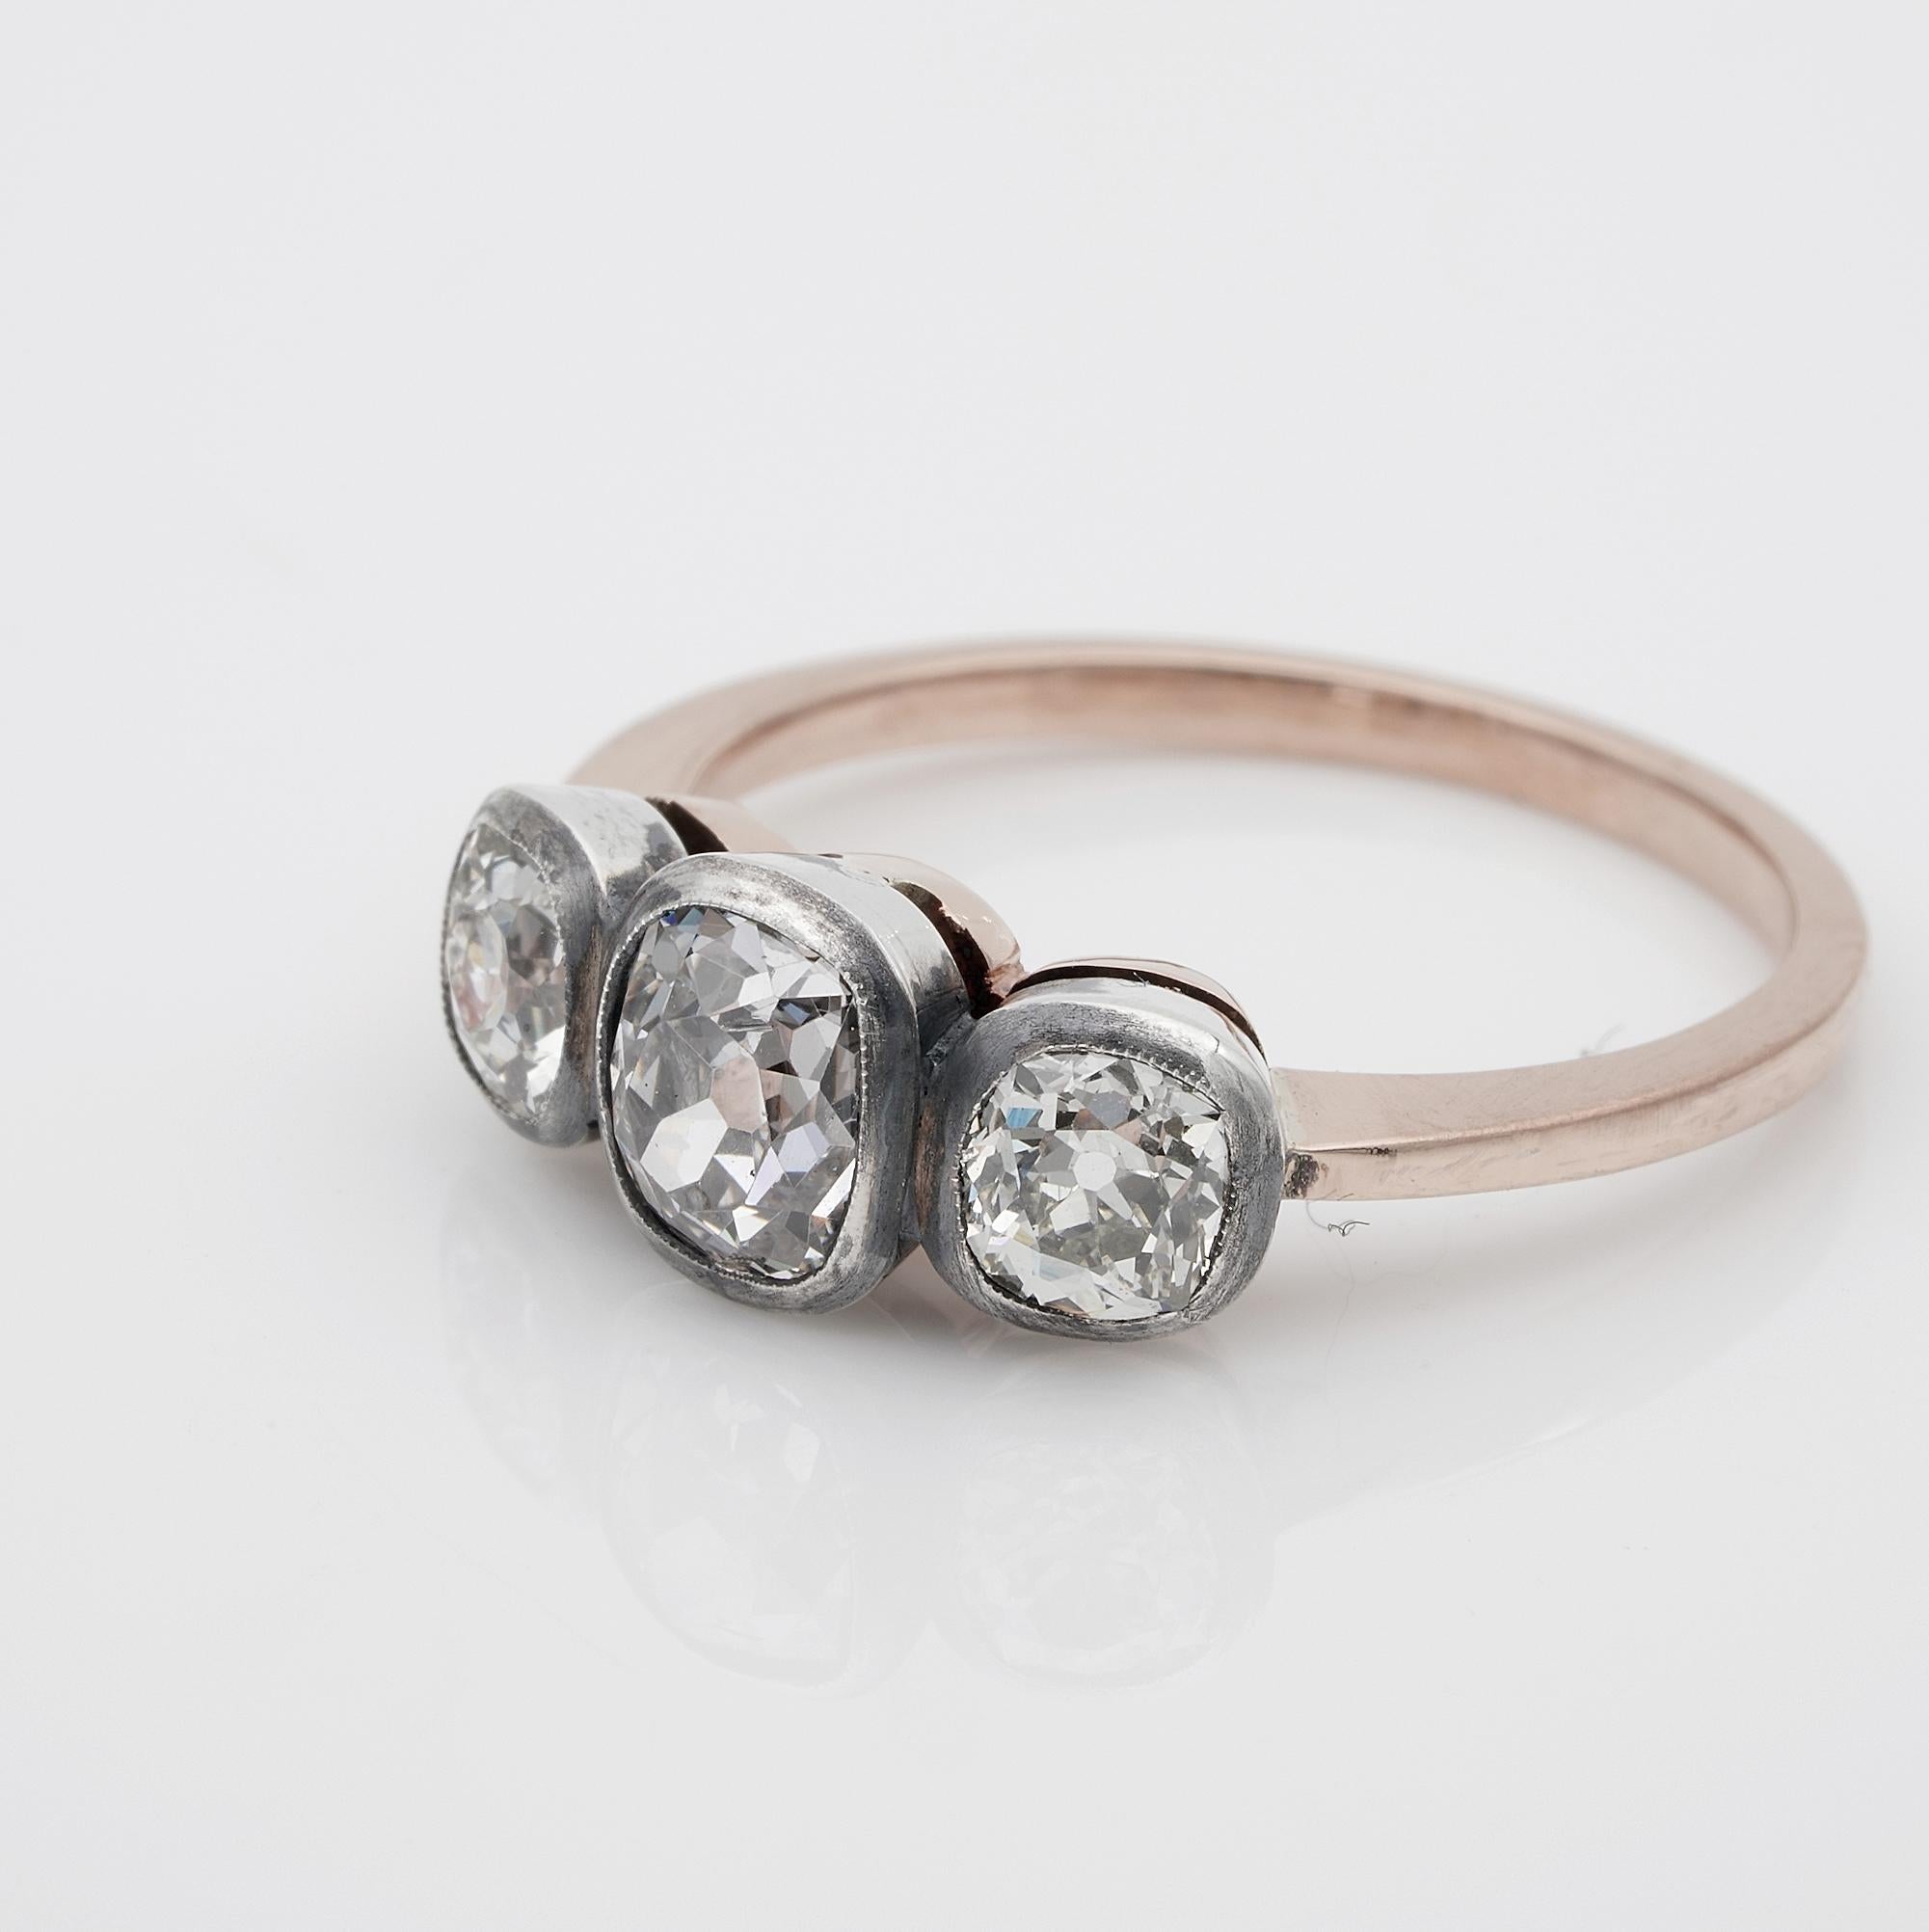 1 4 carat diamond ring